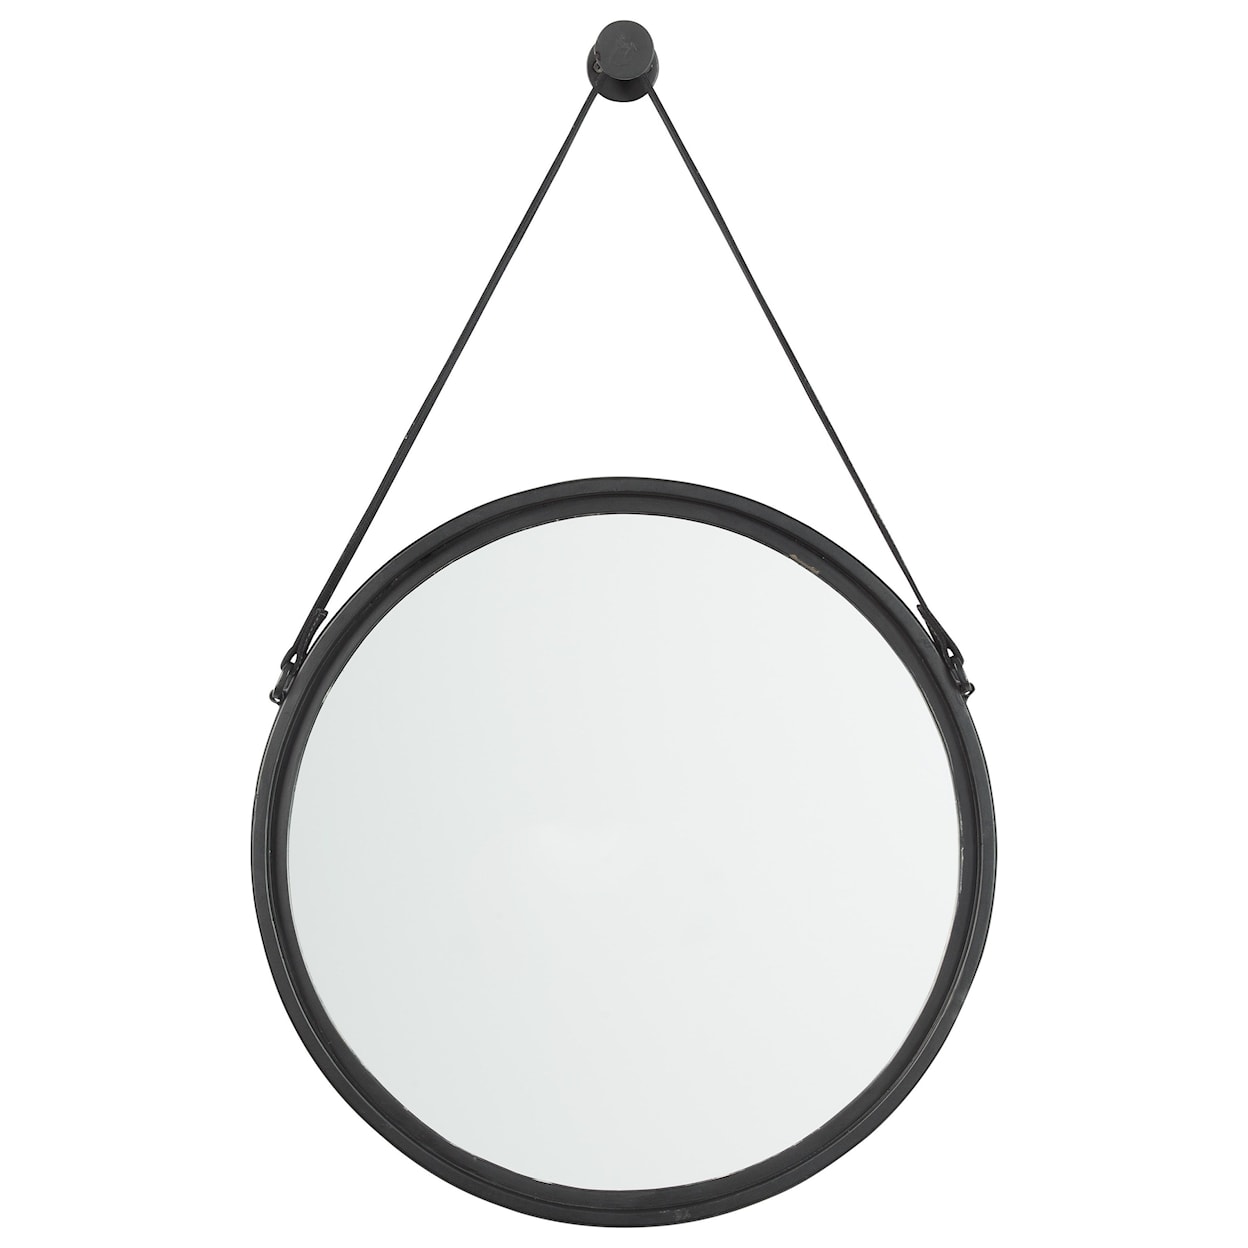 Ashley Furniture Signature Design Accent Mirrors Dusan Black Accent Mirror